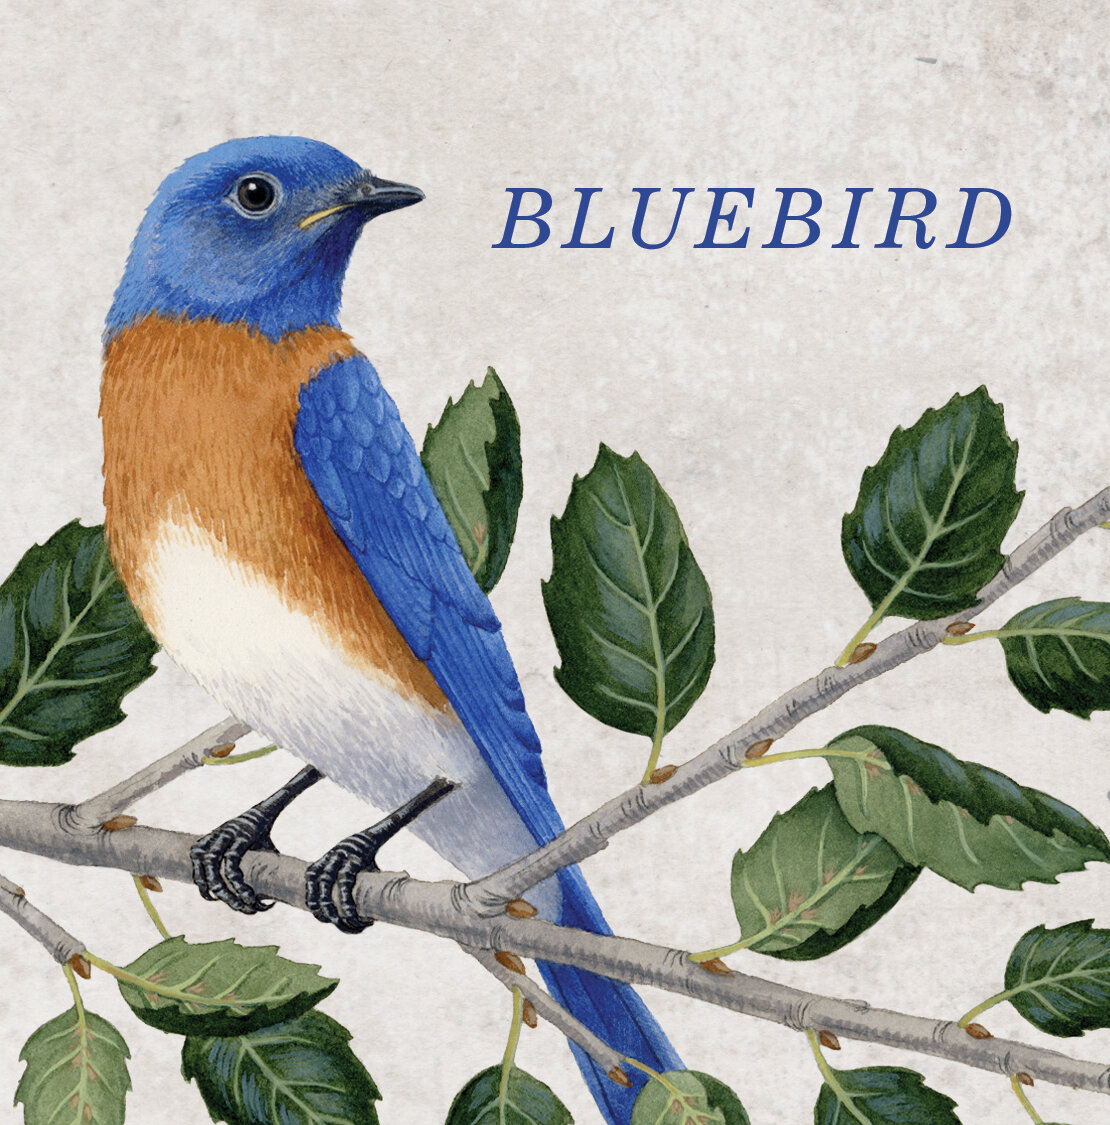 Cima Collina "Bluebird" Red Blend Label